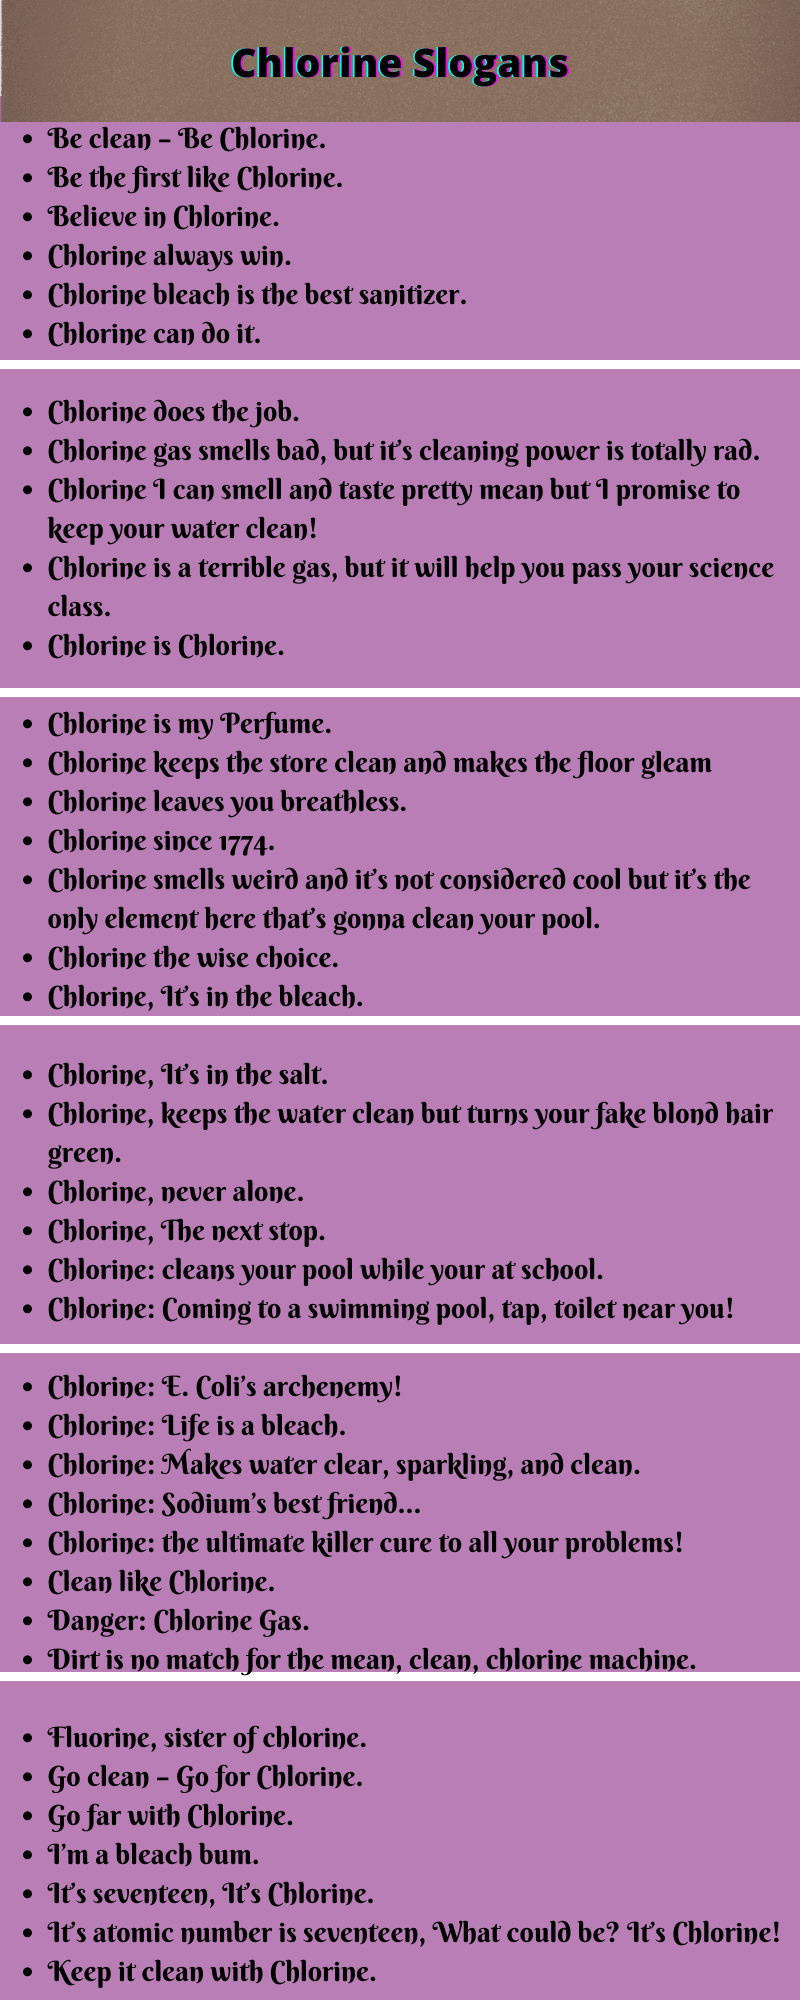 Chlorine Slogans 